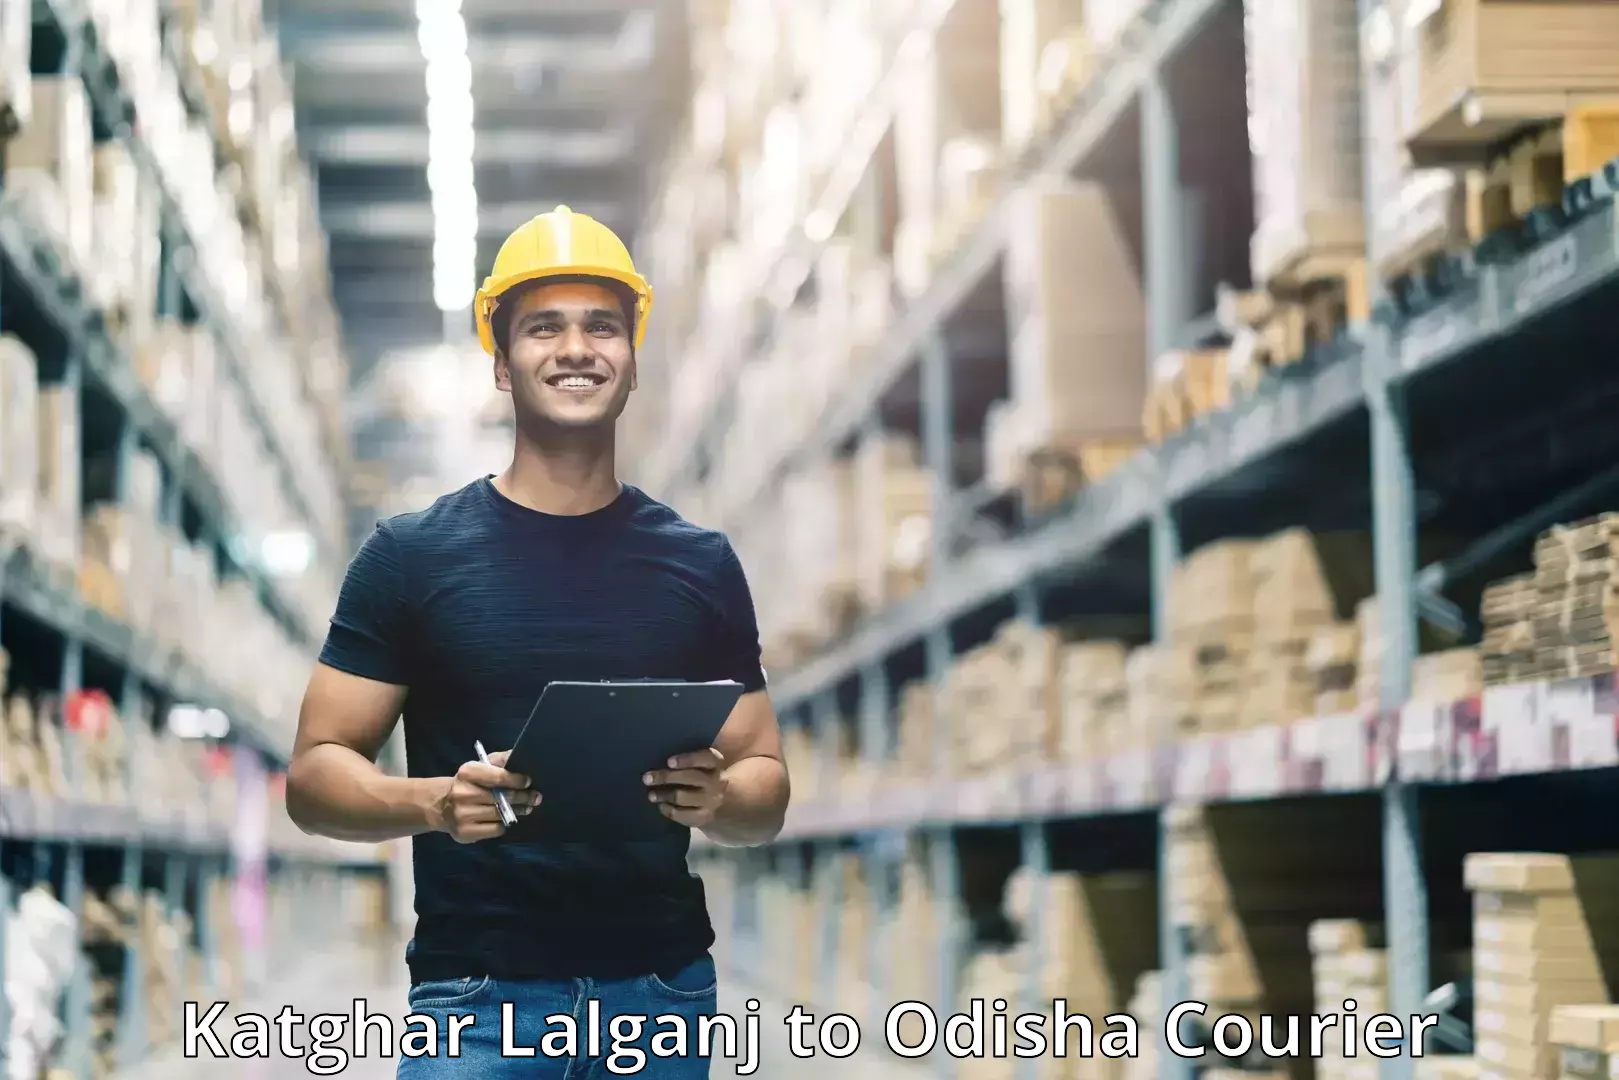 Courier service partnerships Katghar Lalganj to Khaprakhol